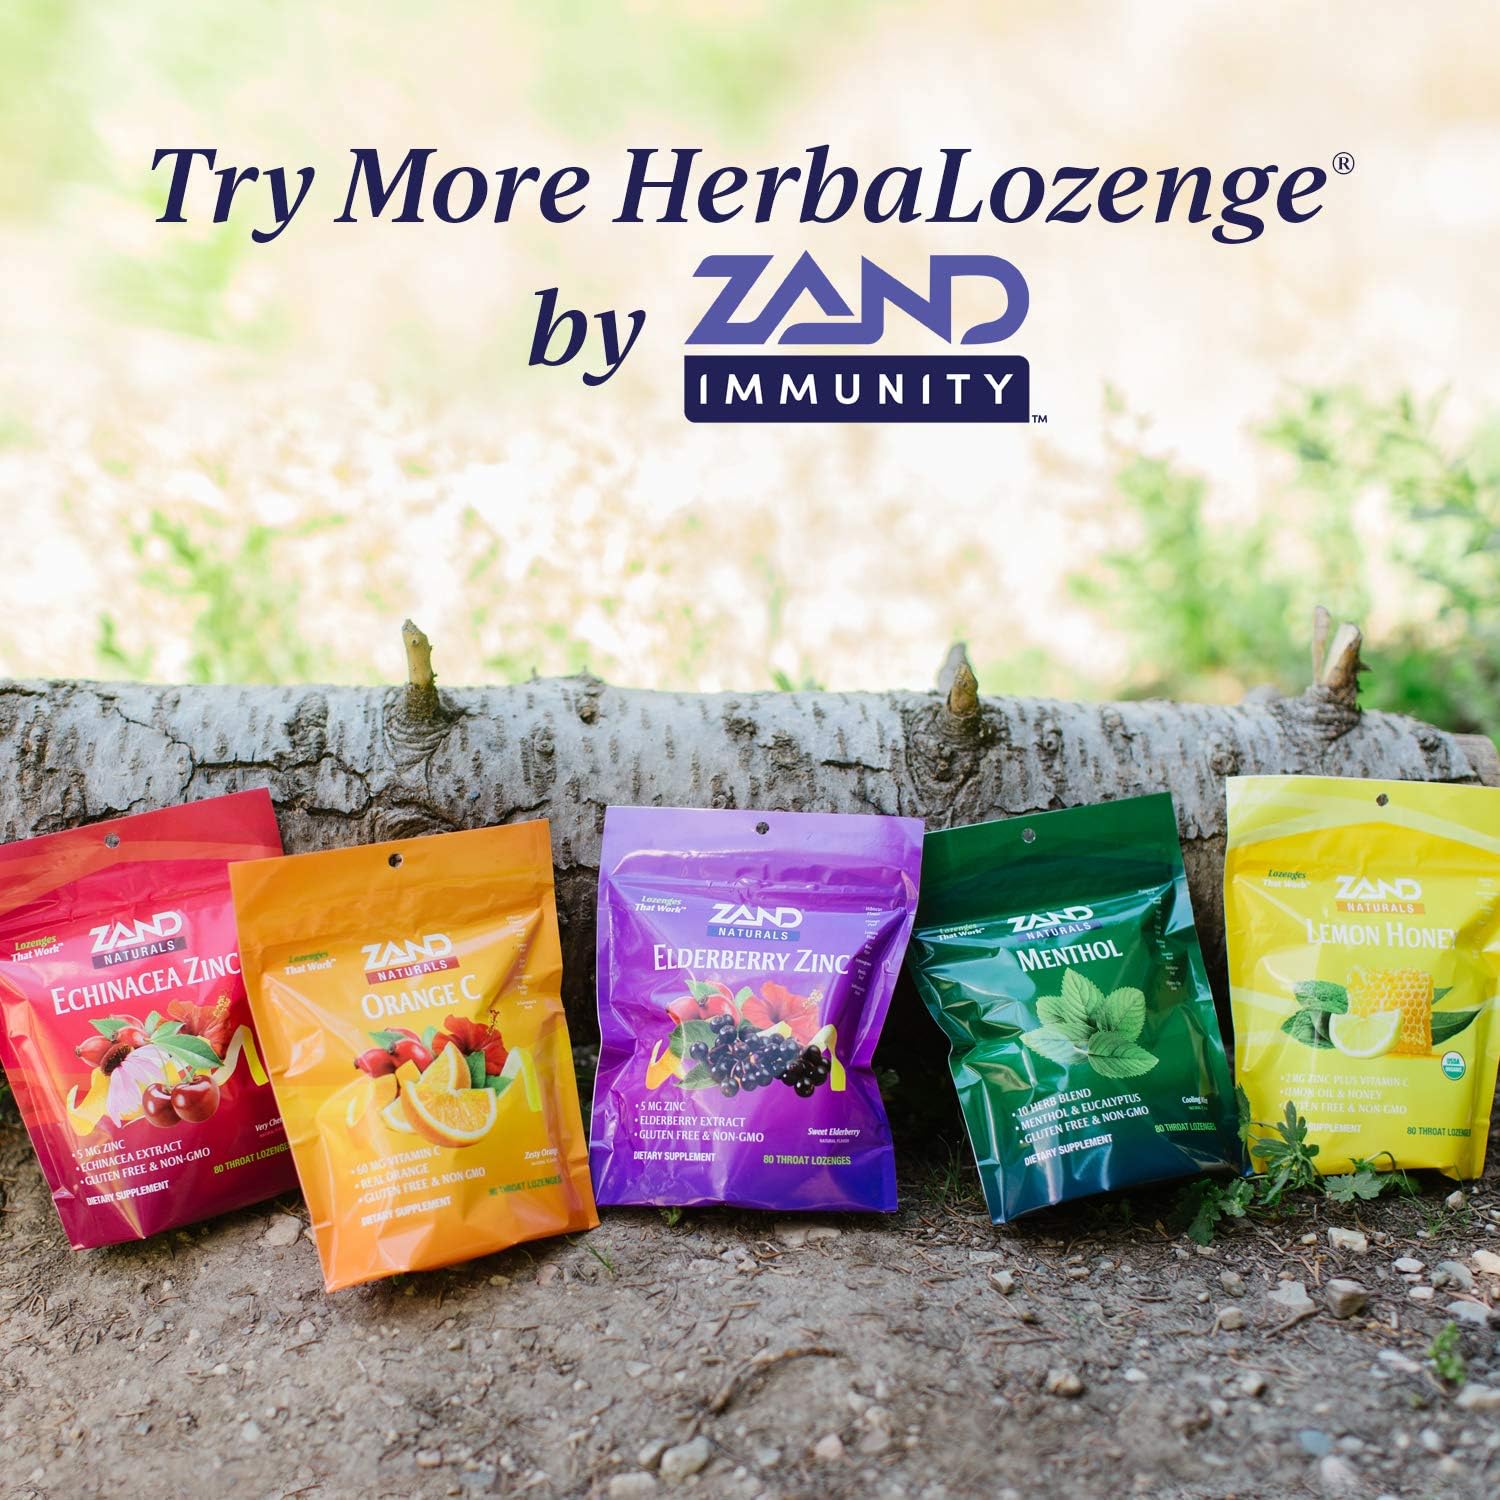 Zand HerbaLozenge Cherry Echinacea Zinc | Throat Lozenges | No Corn Syrup, No Cane Sugar, No Colors (12 Bags, 15 Lozenges) : Health & Household